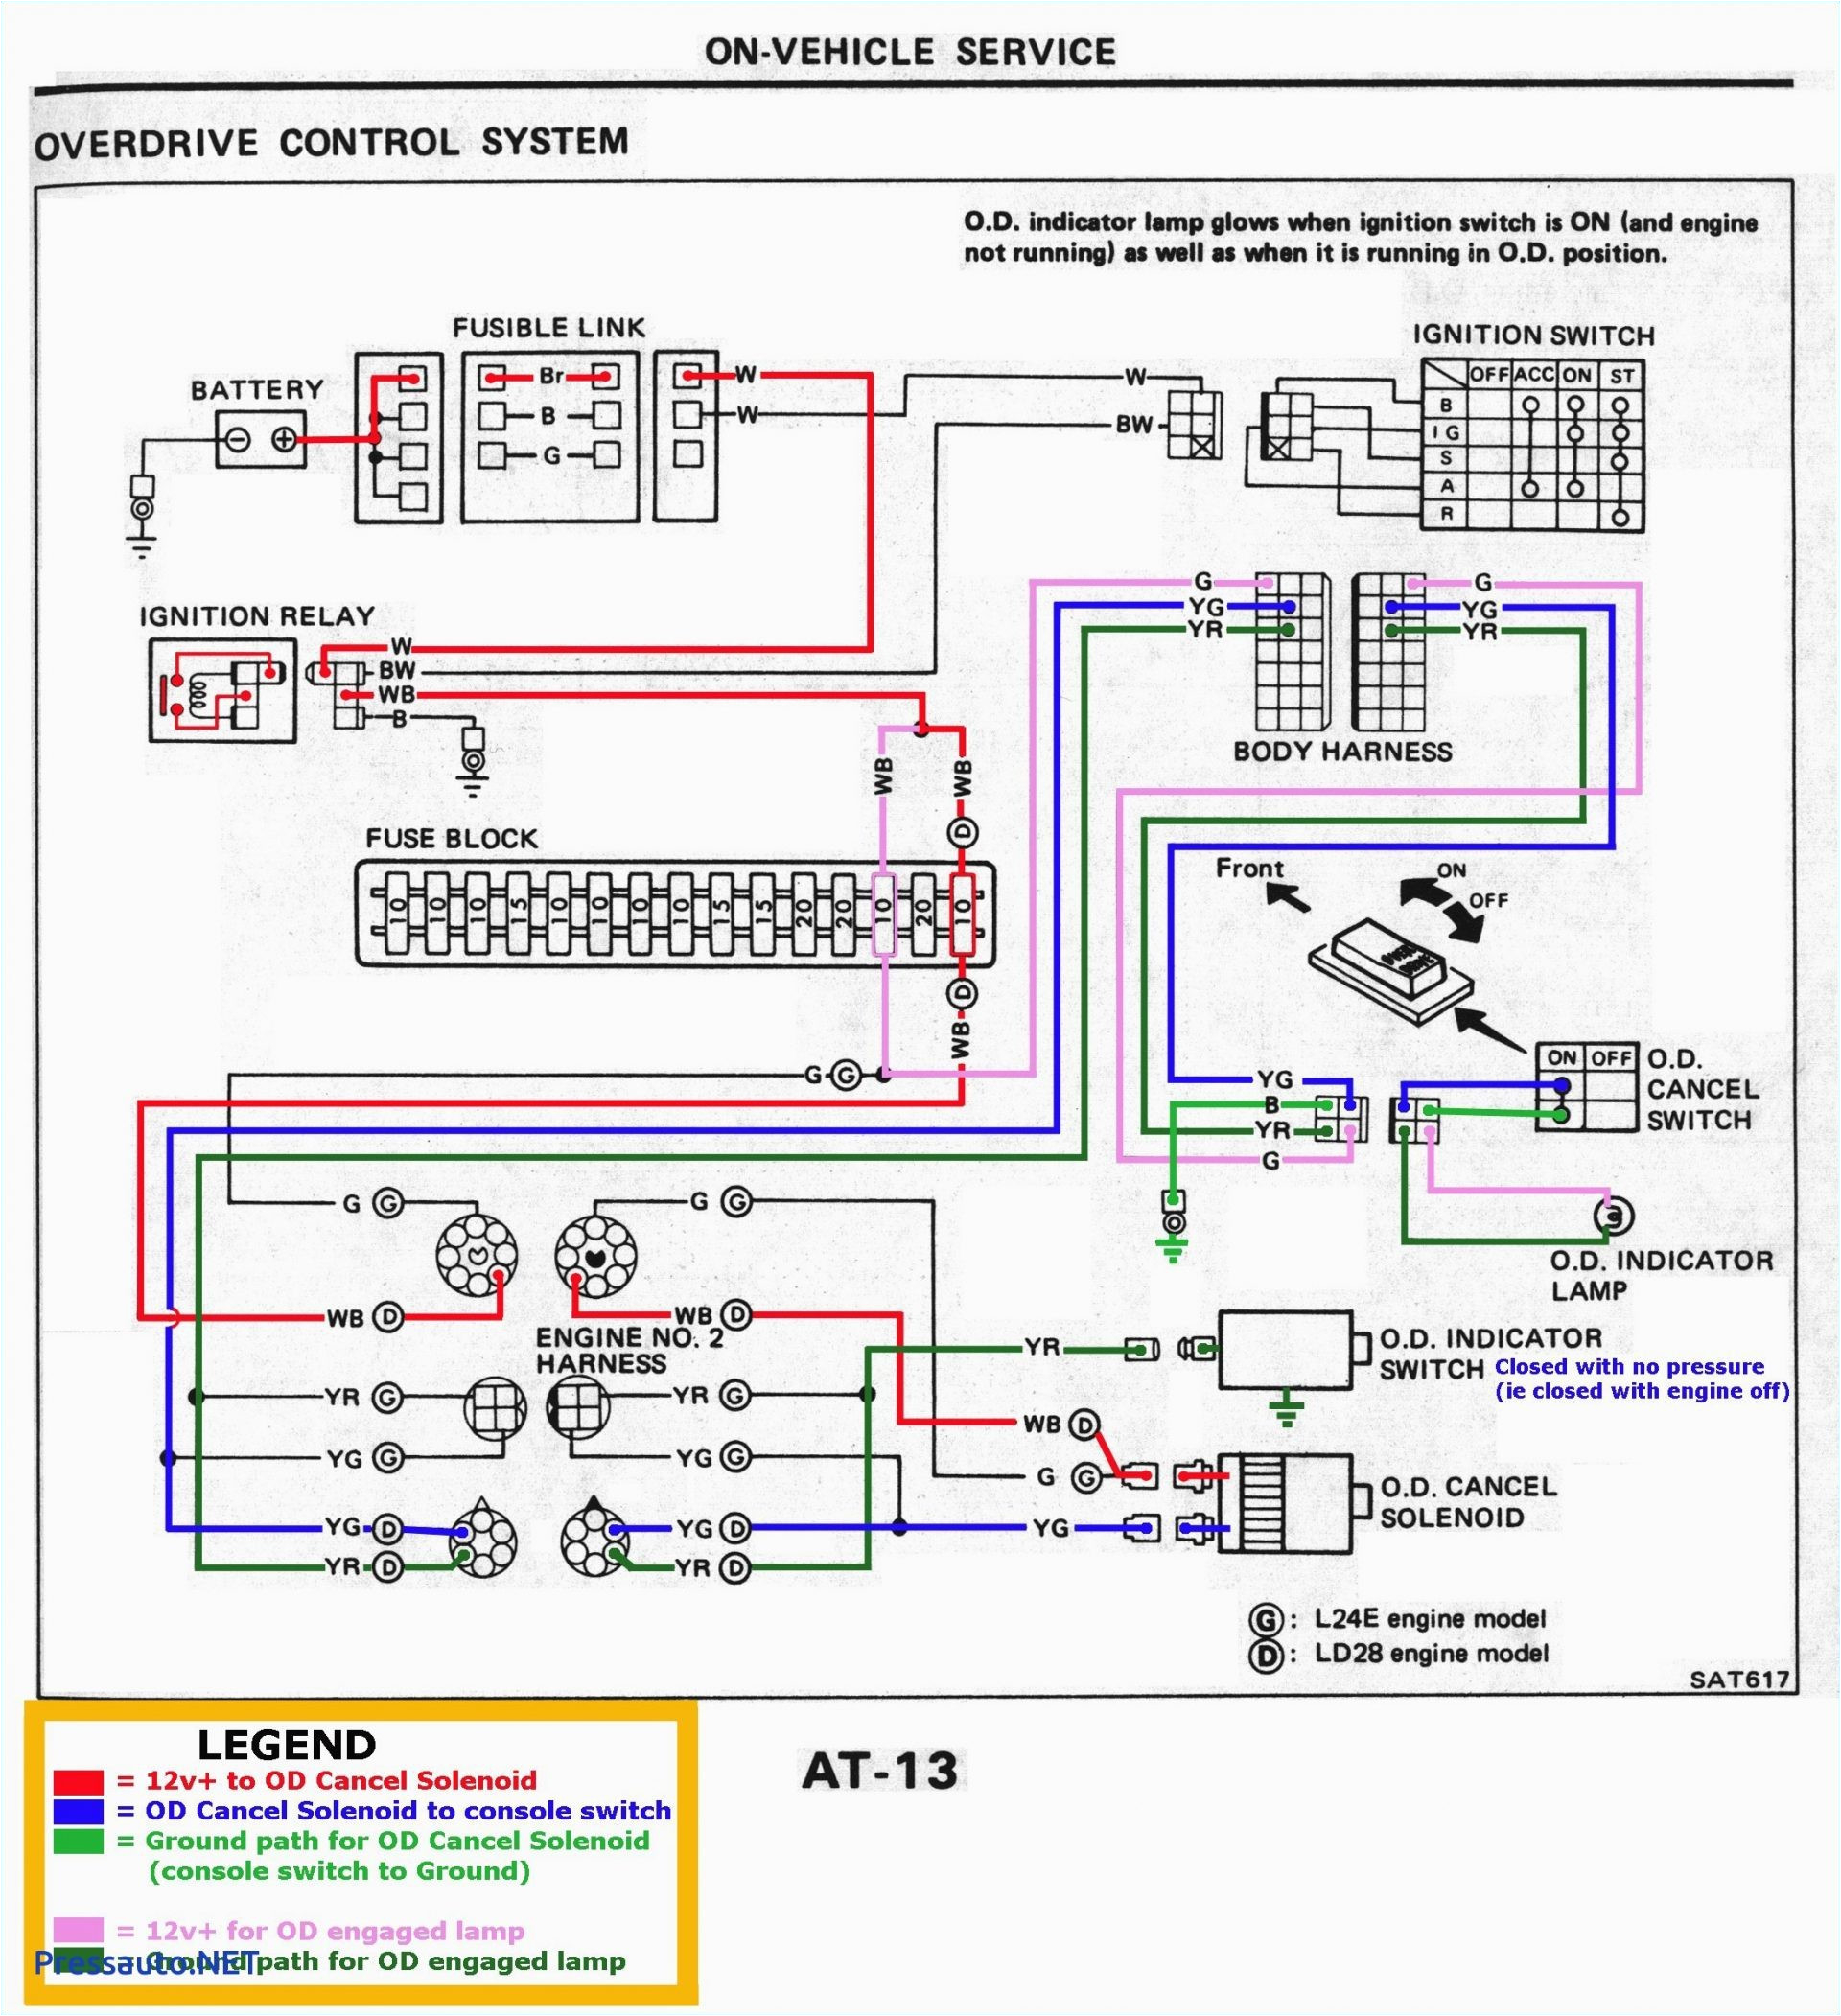 2013 gmc trailer wiring harness diagram wiring diagram used2013 gmc trailer wiring harness diagram wiring diagram